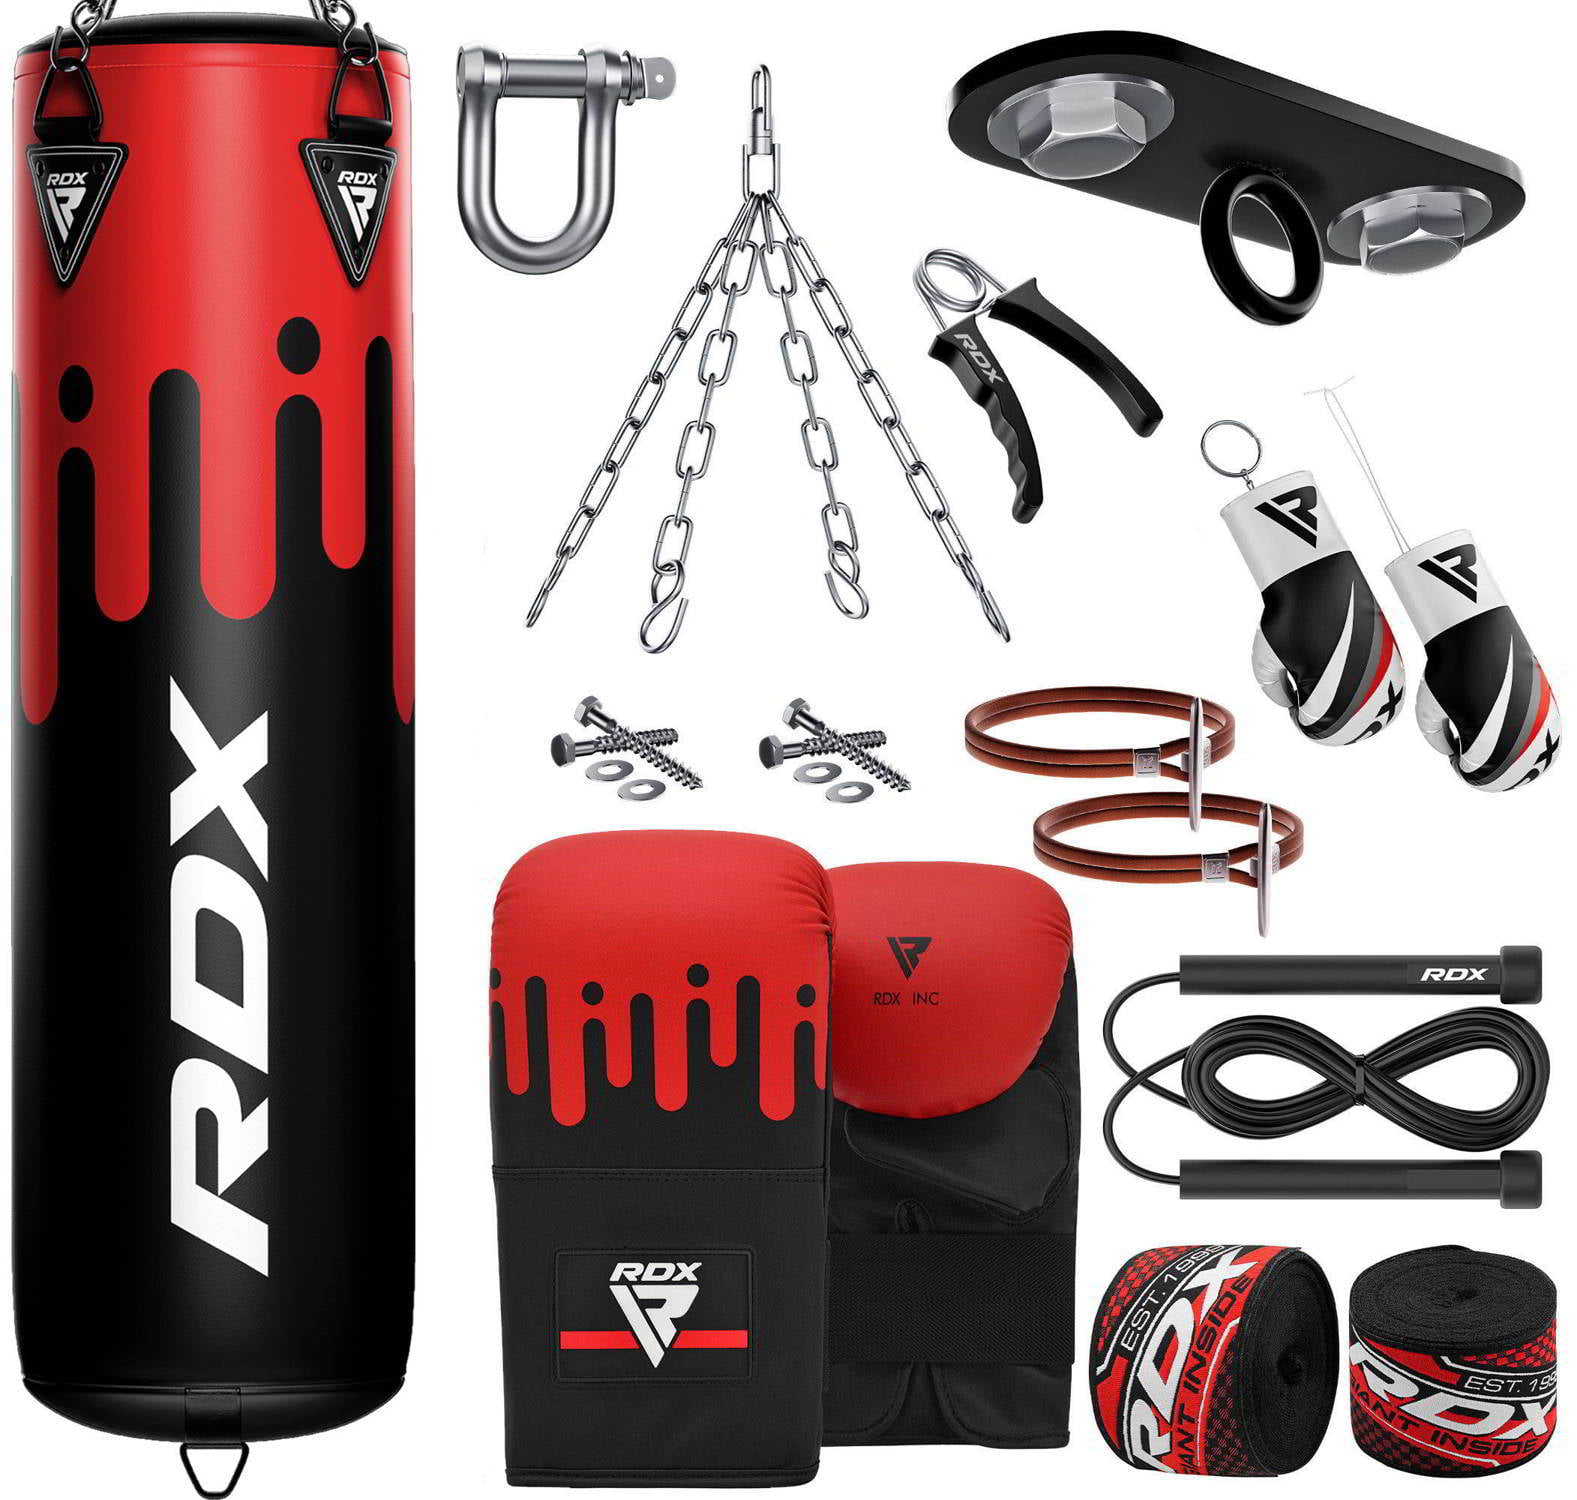 Chains Bracket Gloves MADX 4ft or 5ft Filled Heavy Boxing Punch Bag Set 